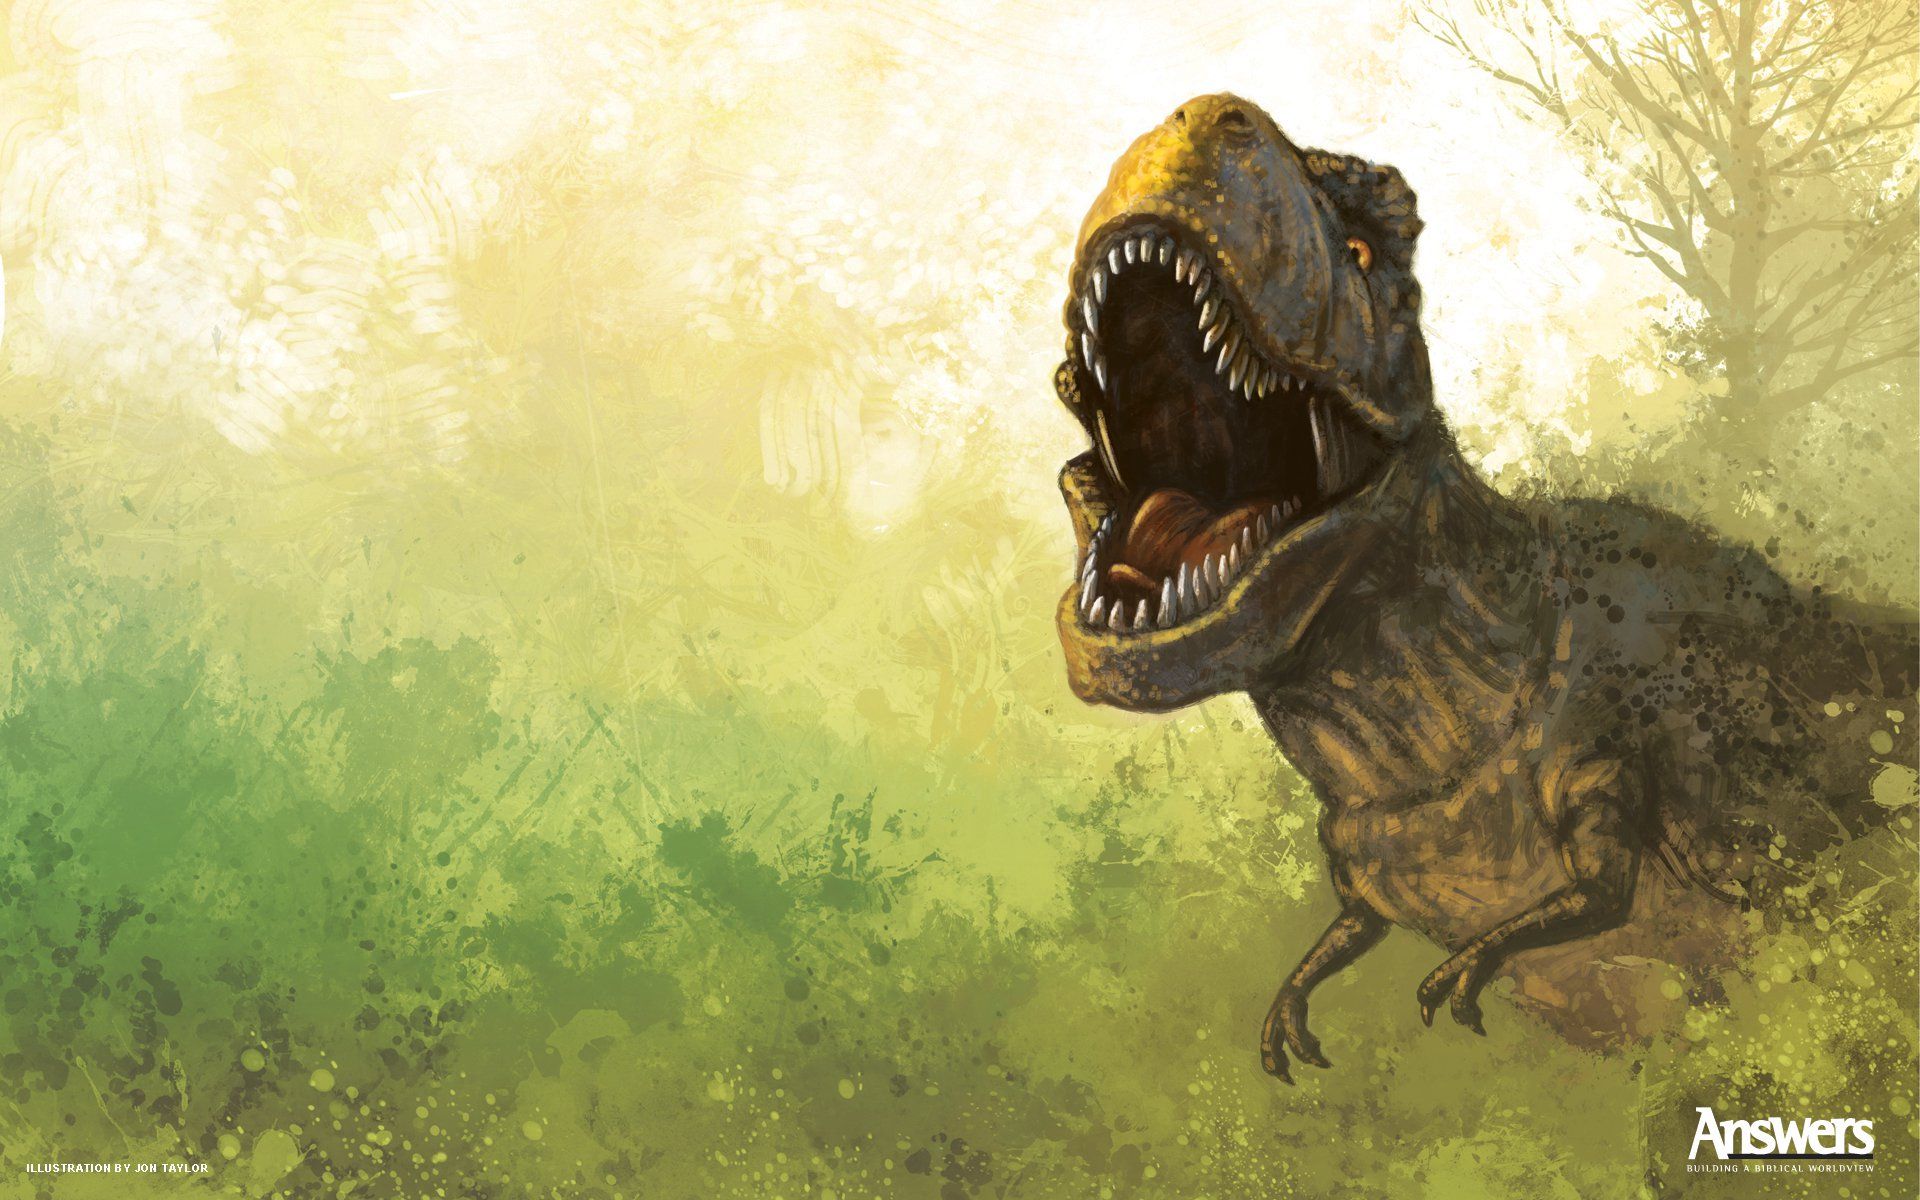 Fondos de escritorio gratis de dinosaurios | Respuestas en Génesis